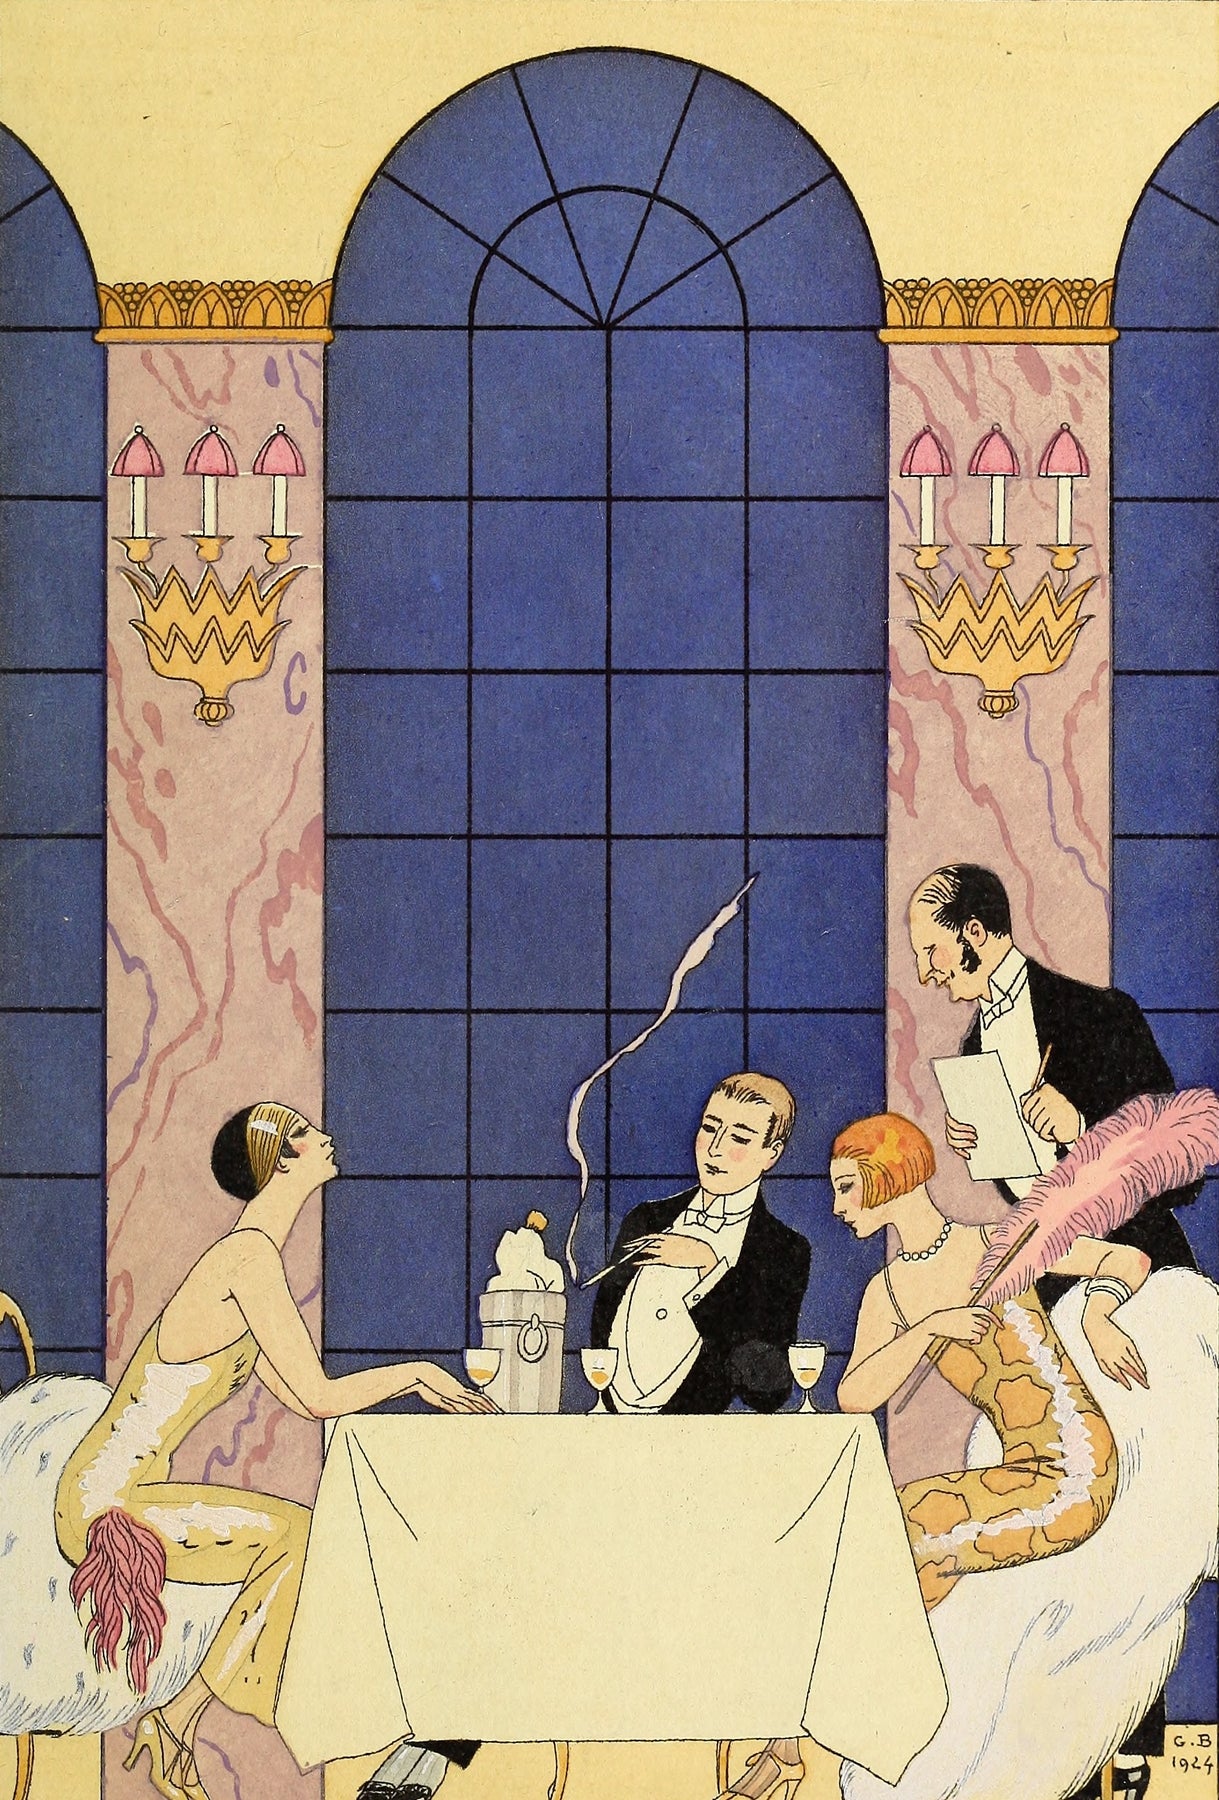 La Gourmandise (1920s) | George Barbier artwork Posters, Prints, & Visual Artwork The Trumpet Shop   